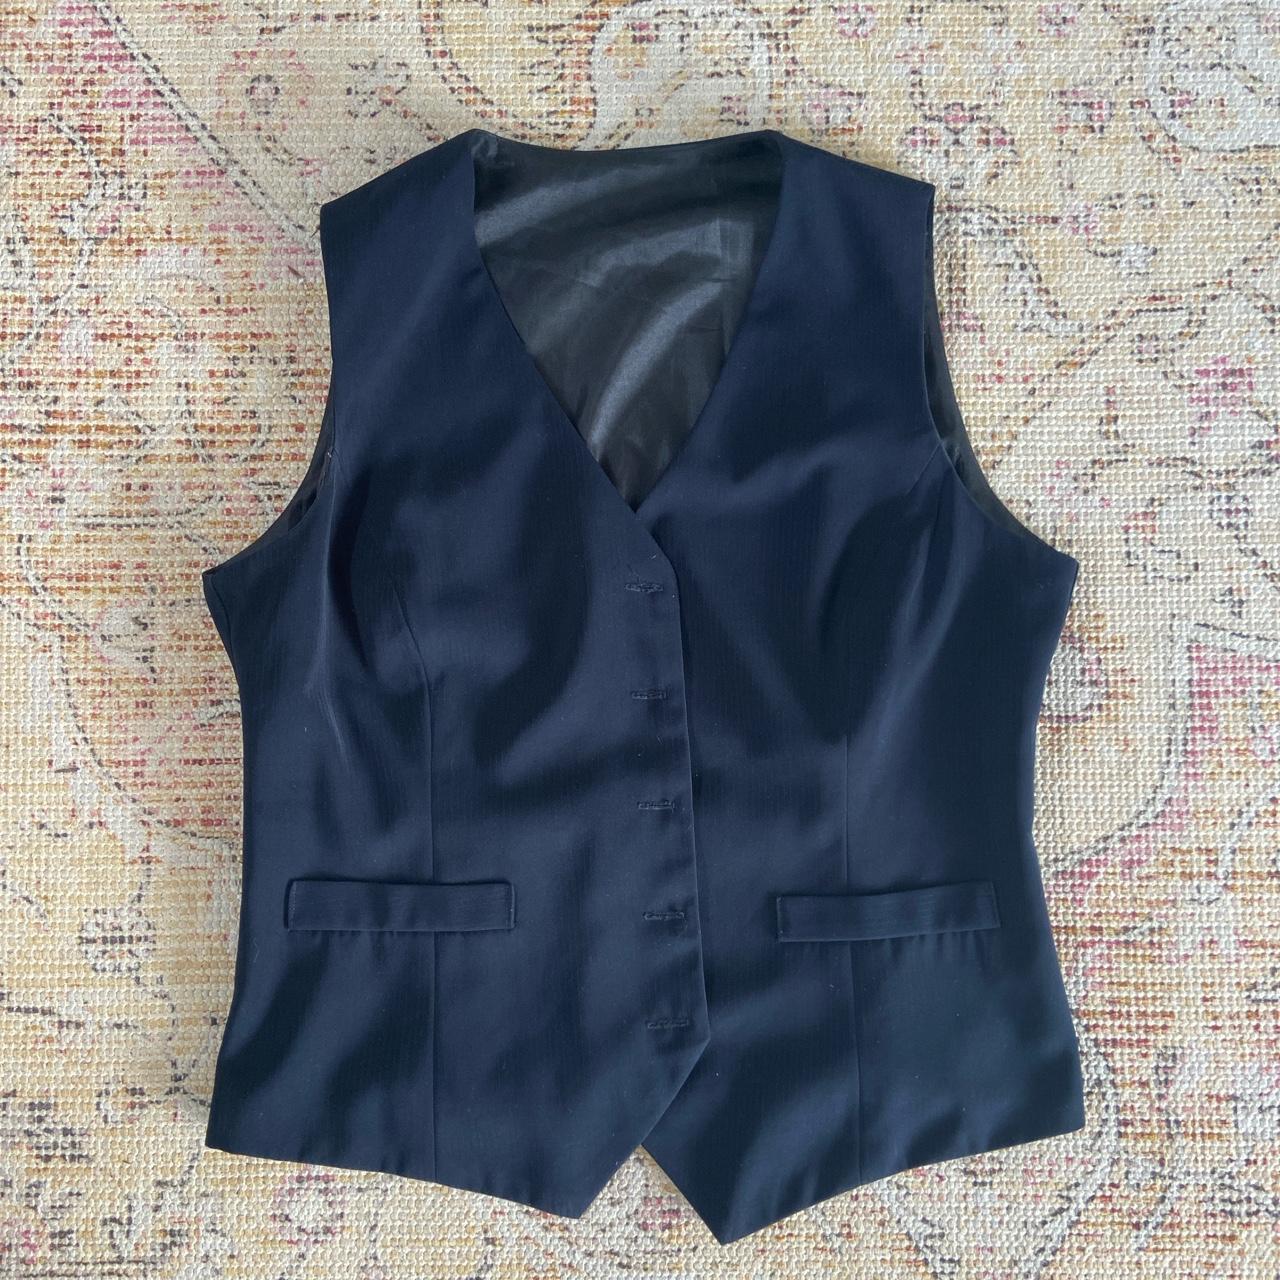 Vintage waist coat / vest Dark navy with faint... - Depop